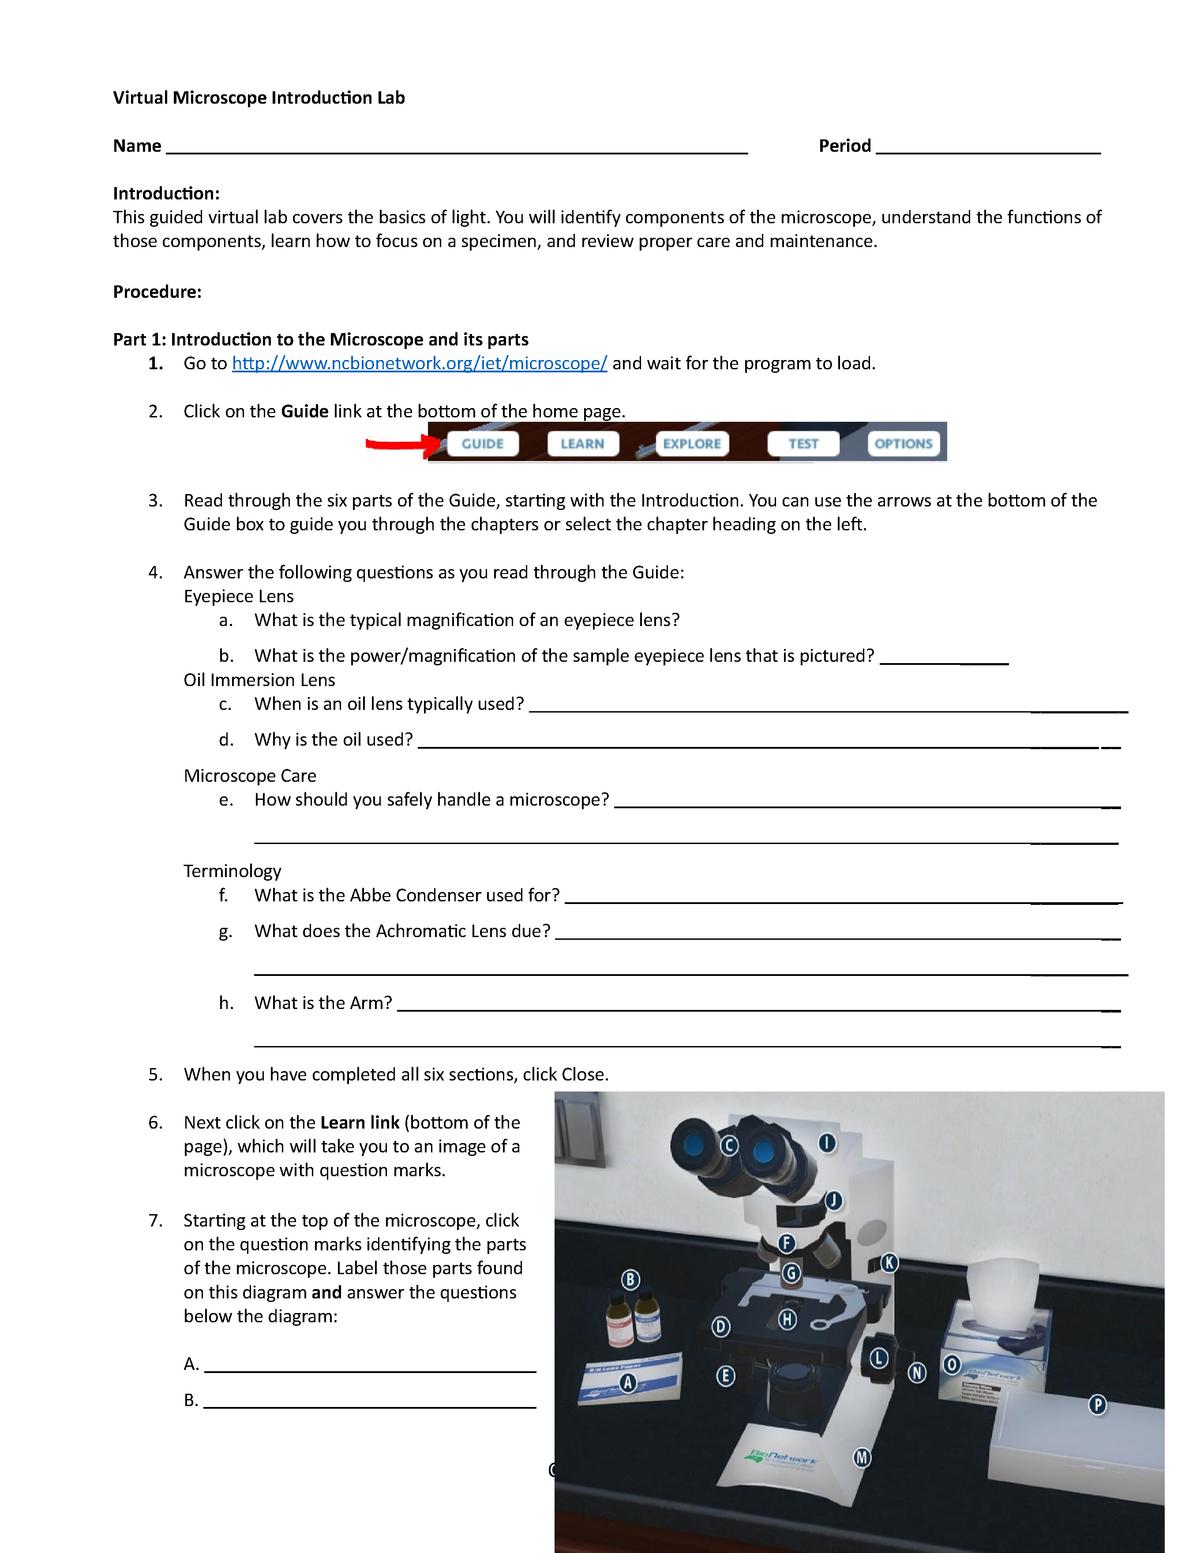 Virtual Microscope Introduction Lab Printable Virtual Microscope Introduction Lab Name Period 